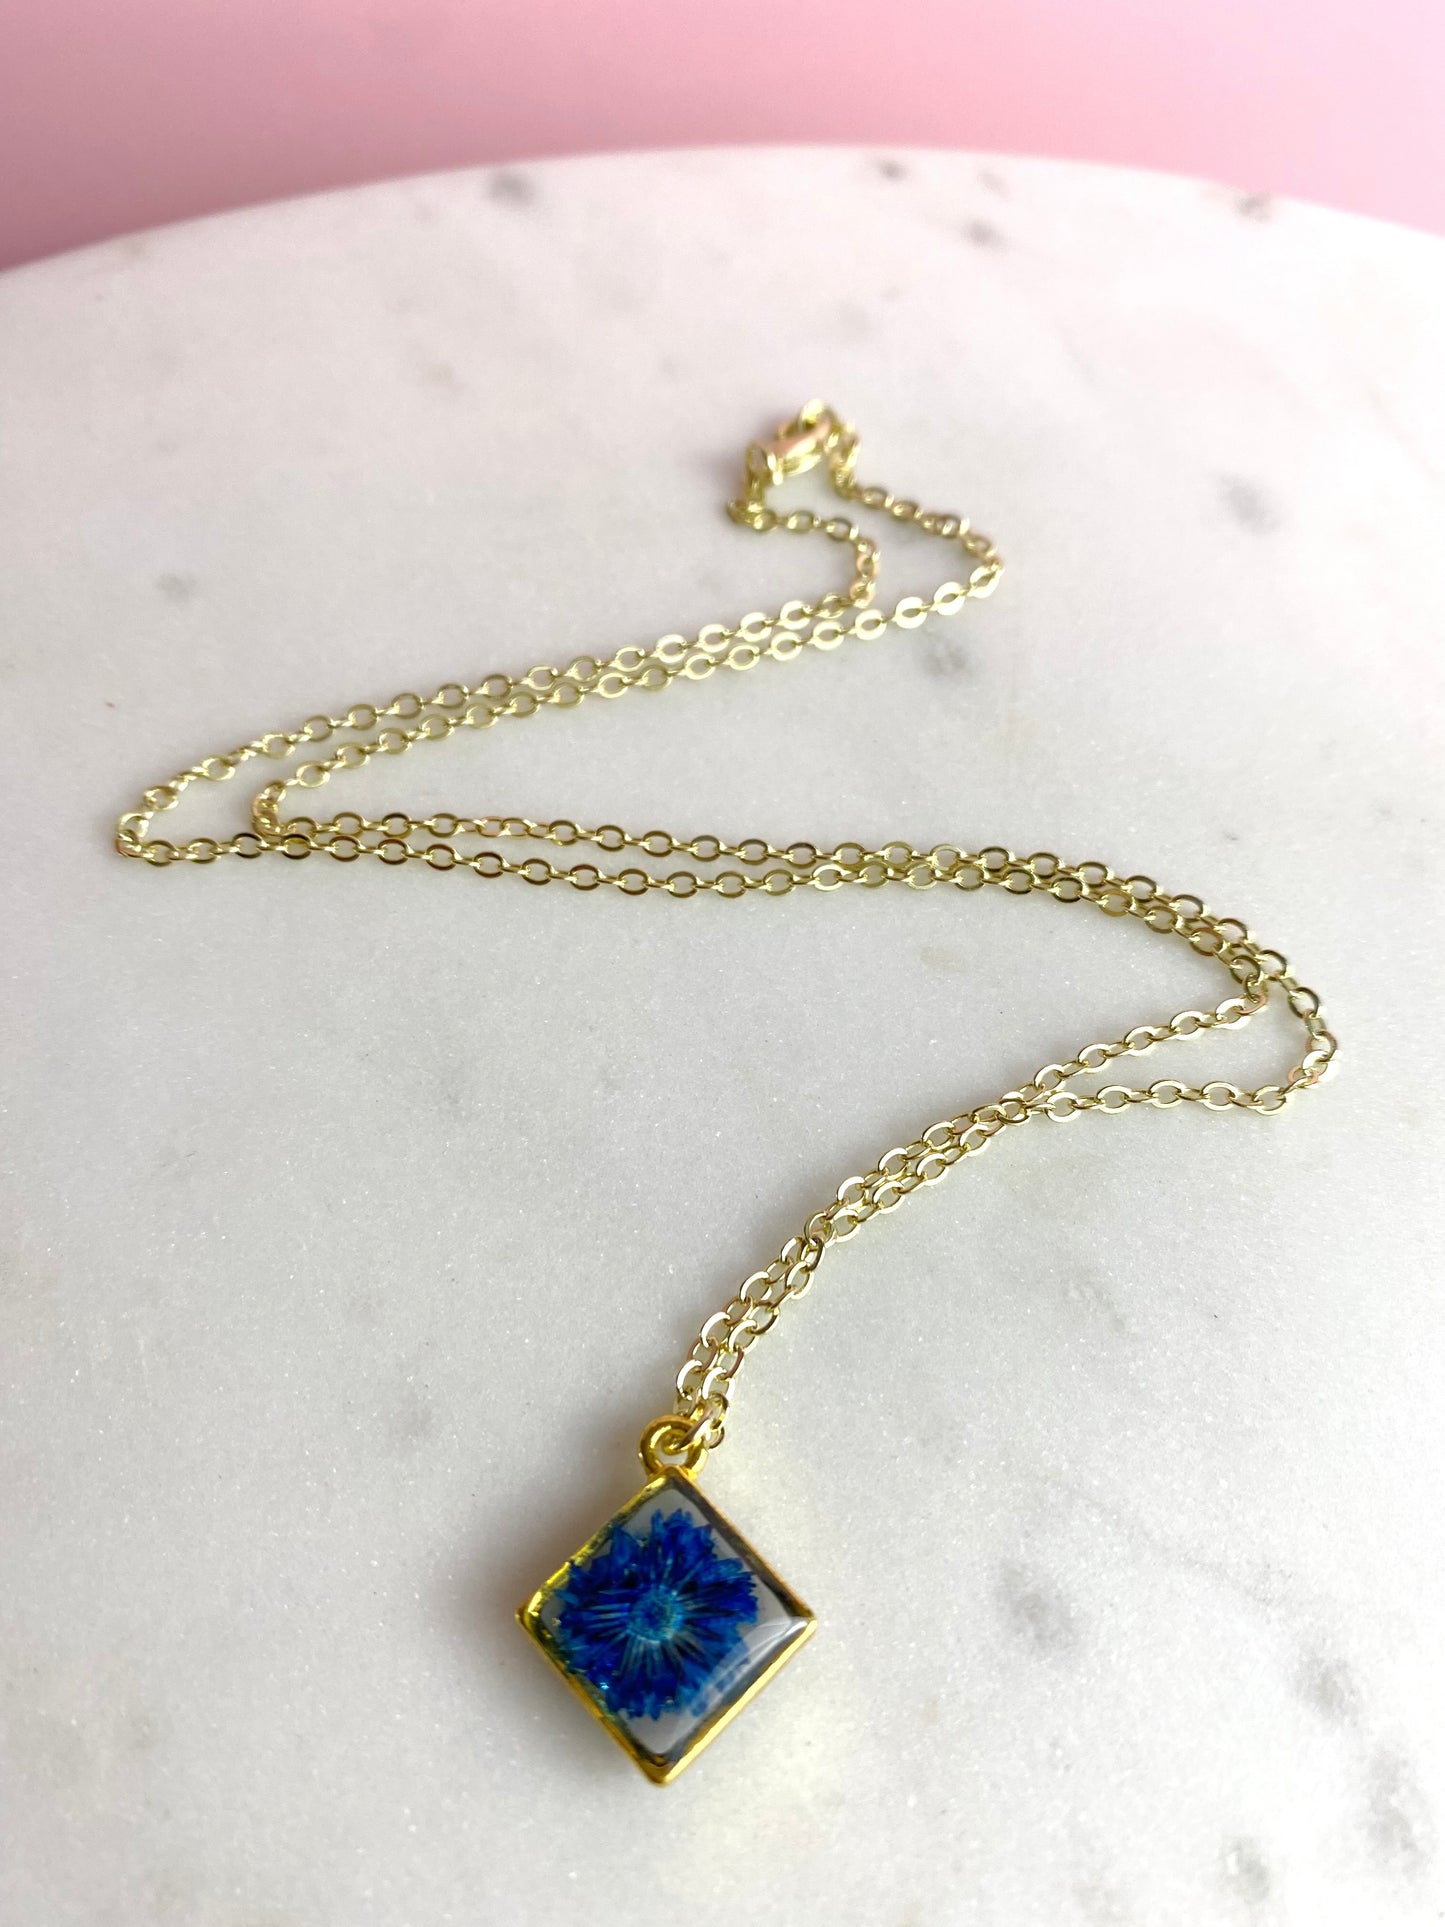 Pressed Flower Necklace | Blue Daisy Diamond | Handmade Jewelry